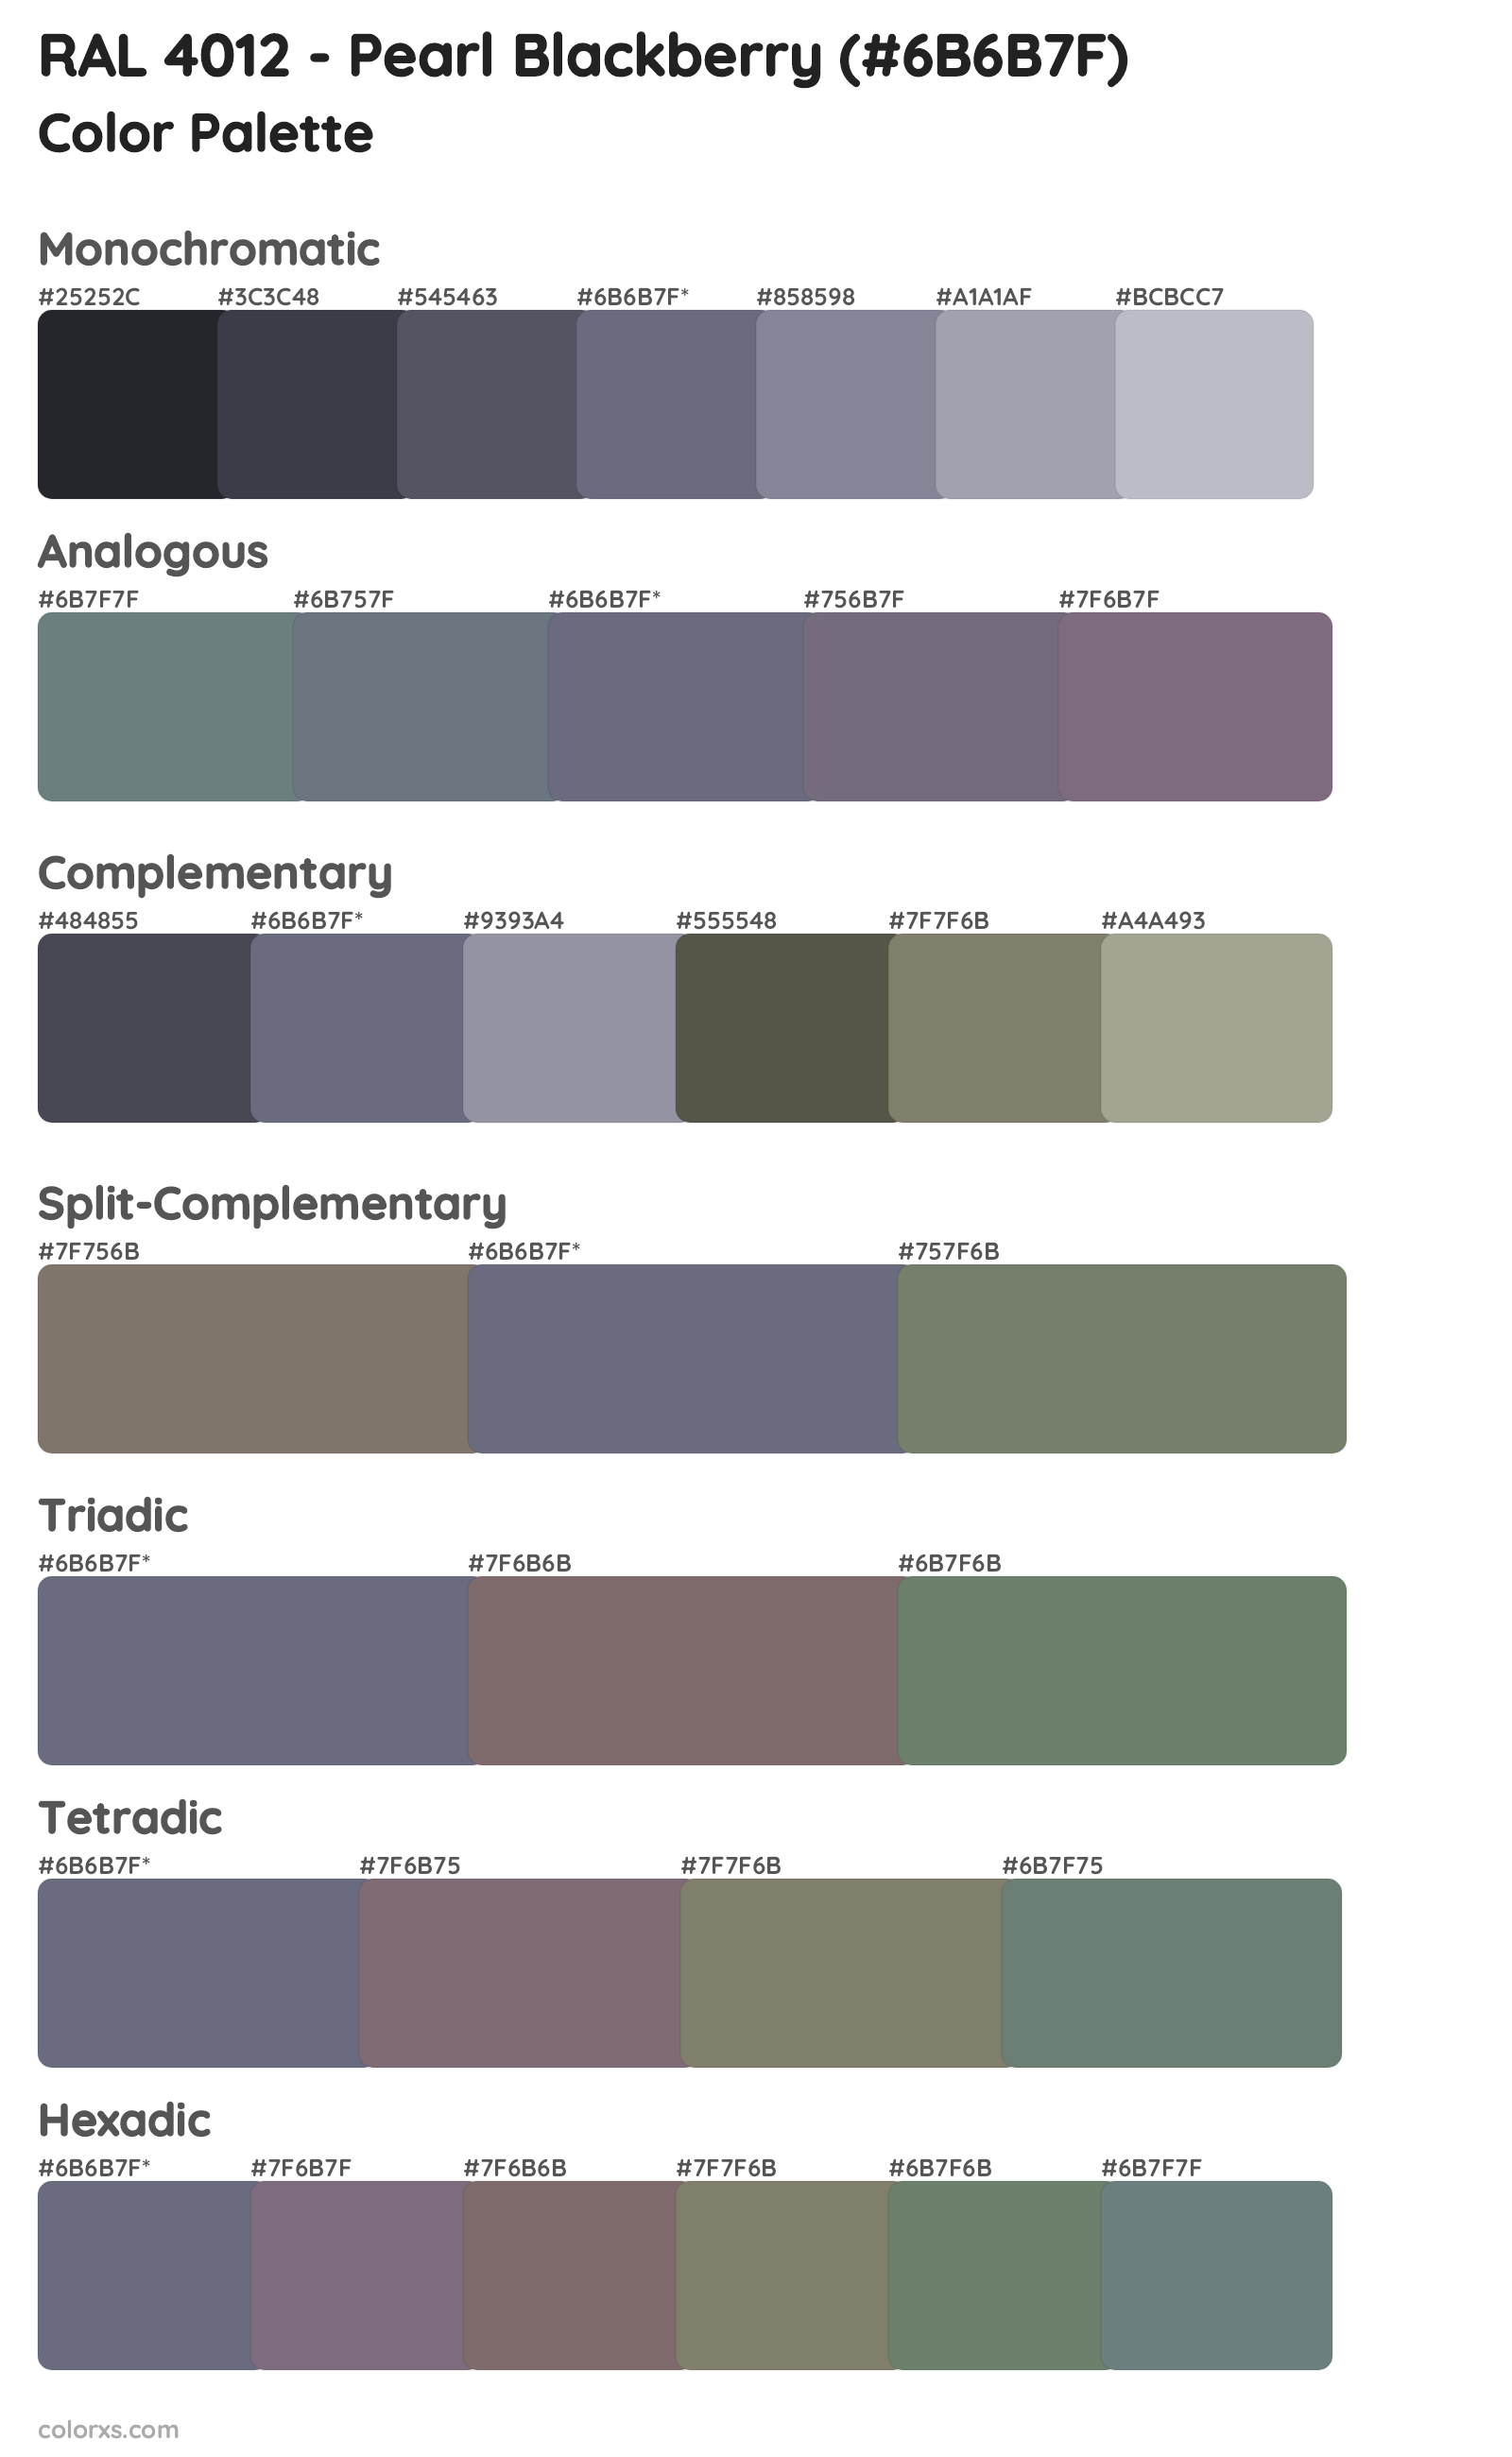 RAL 4012 - Pearl Blackberry Color Scheme Palettes